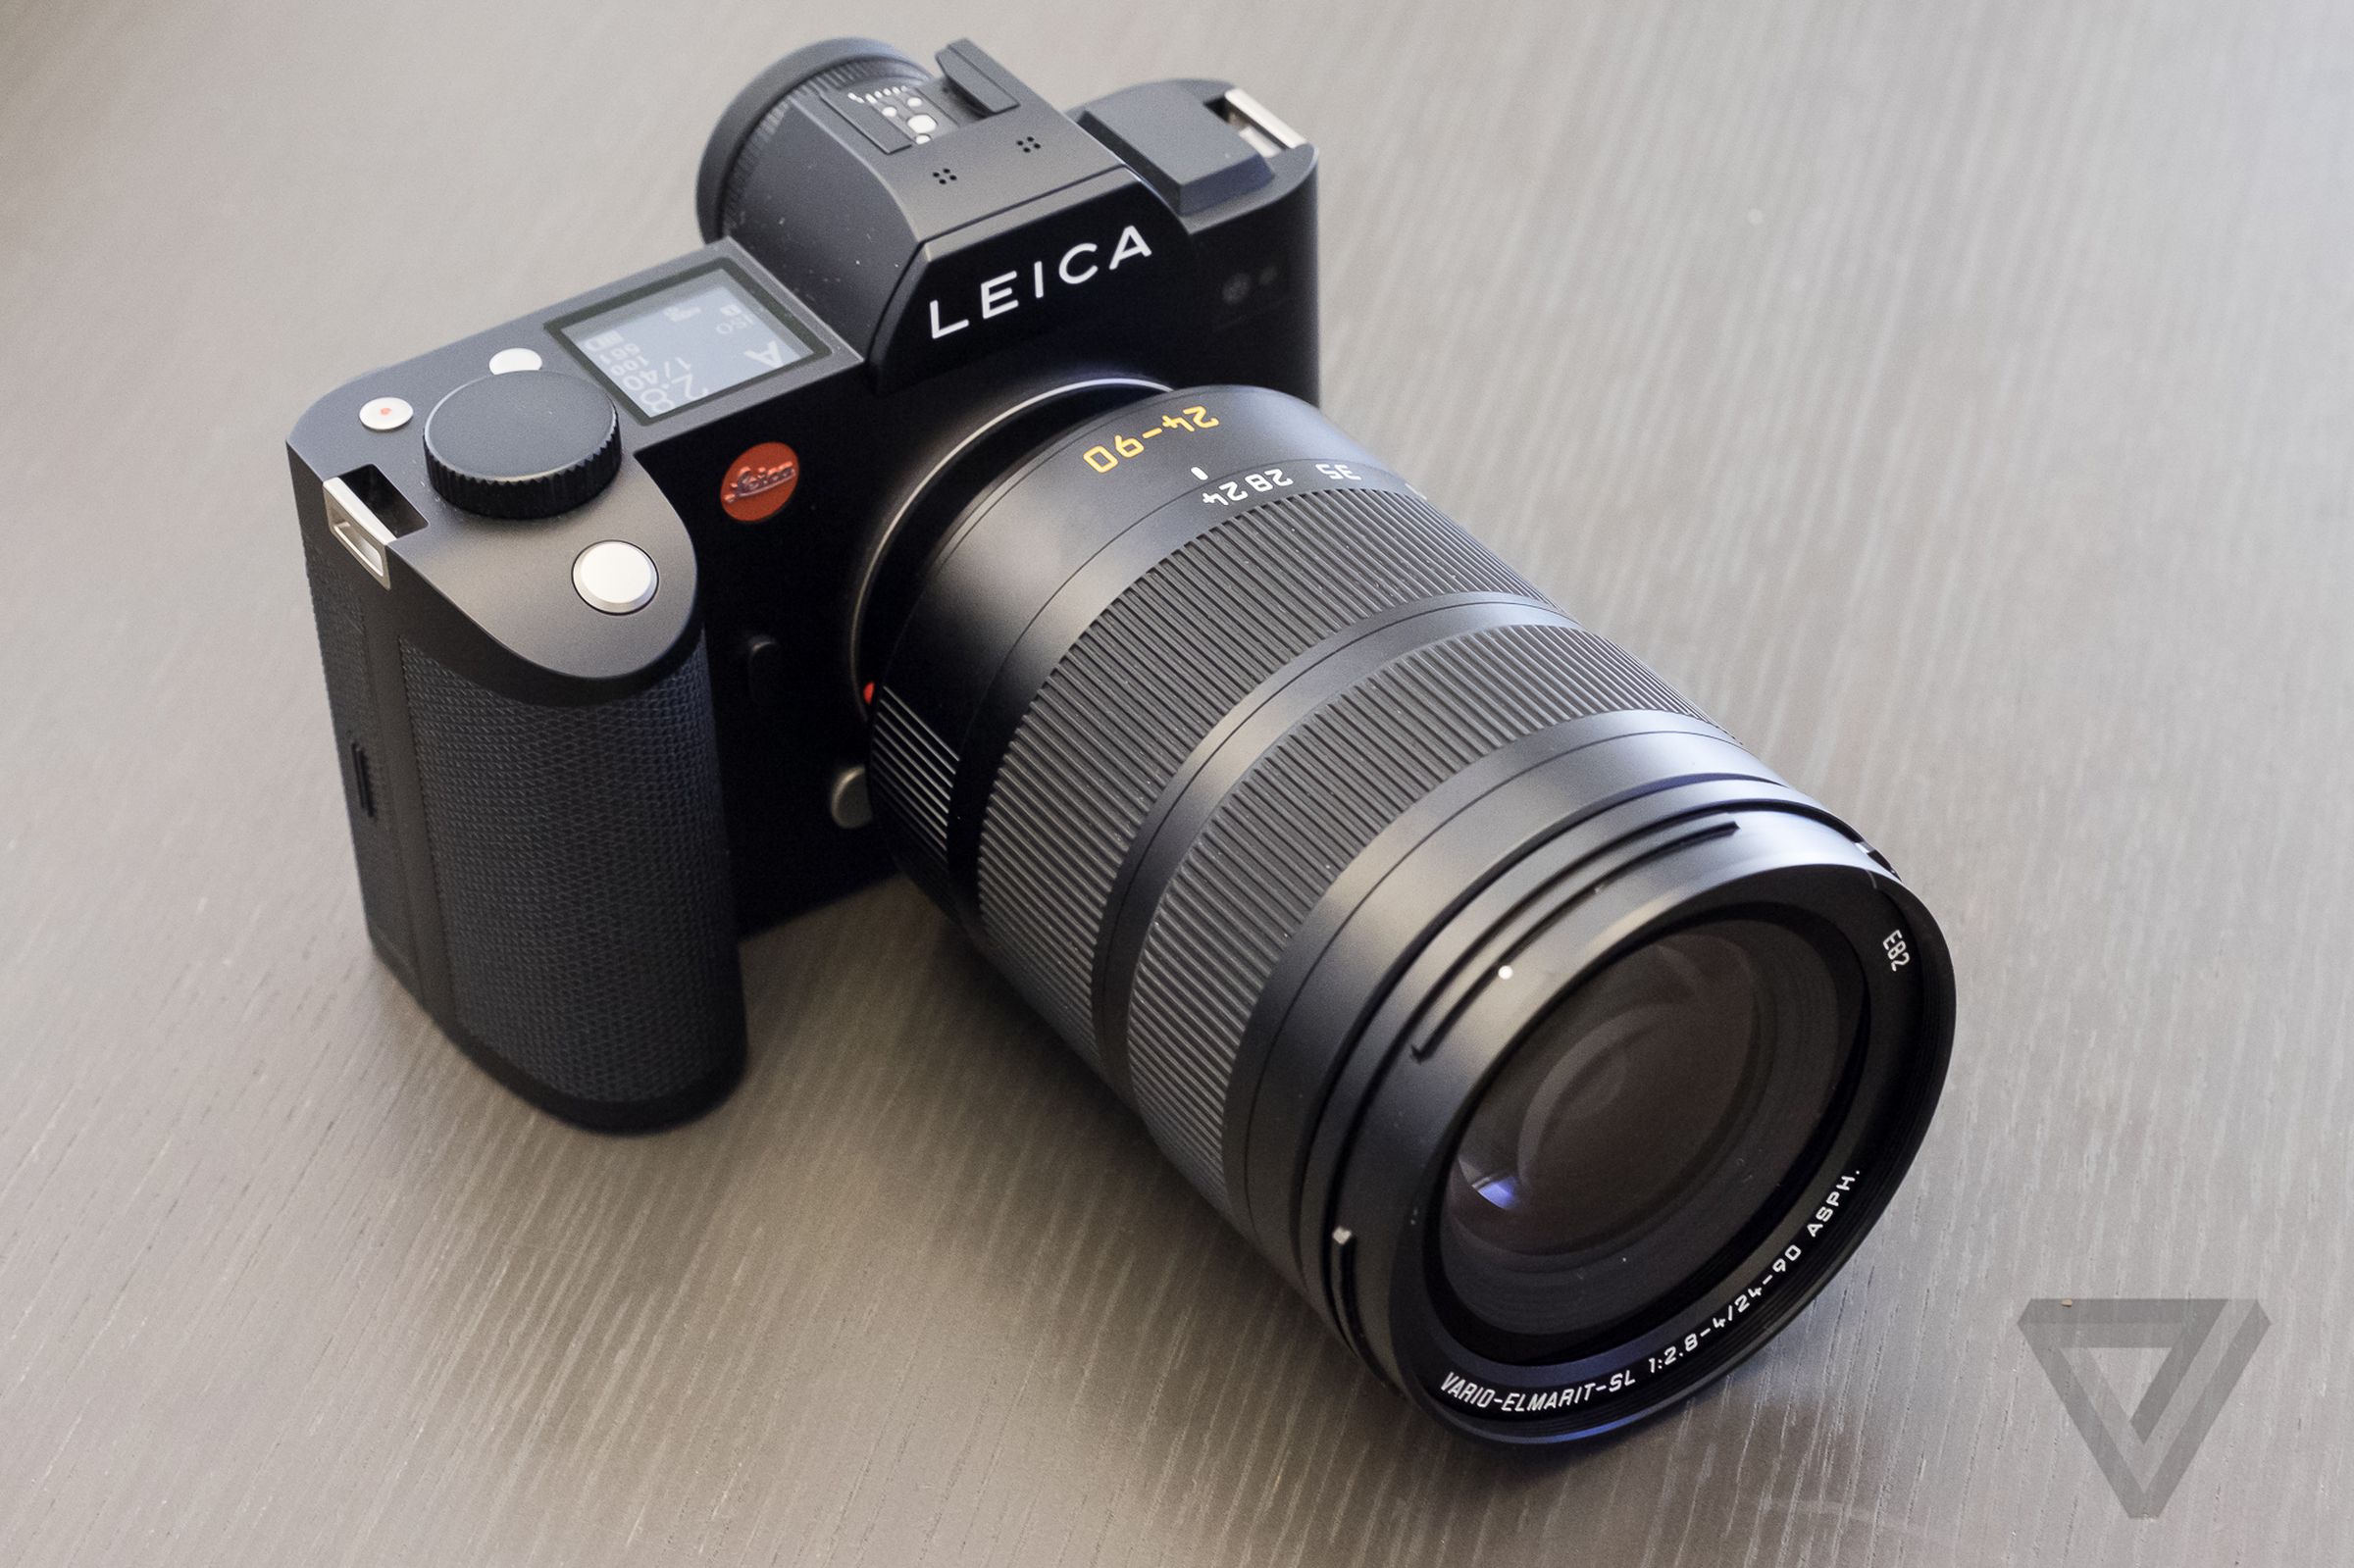 Leica SL pictures